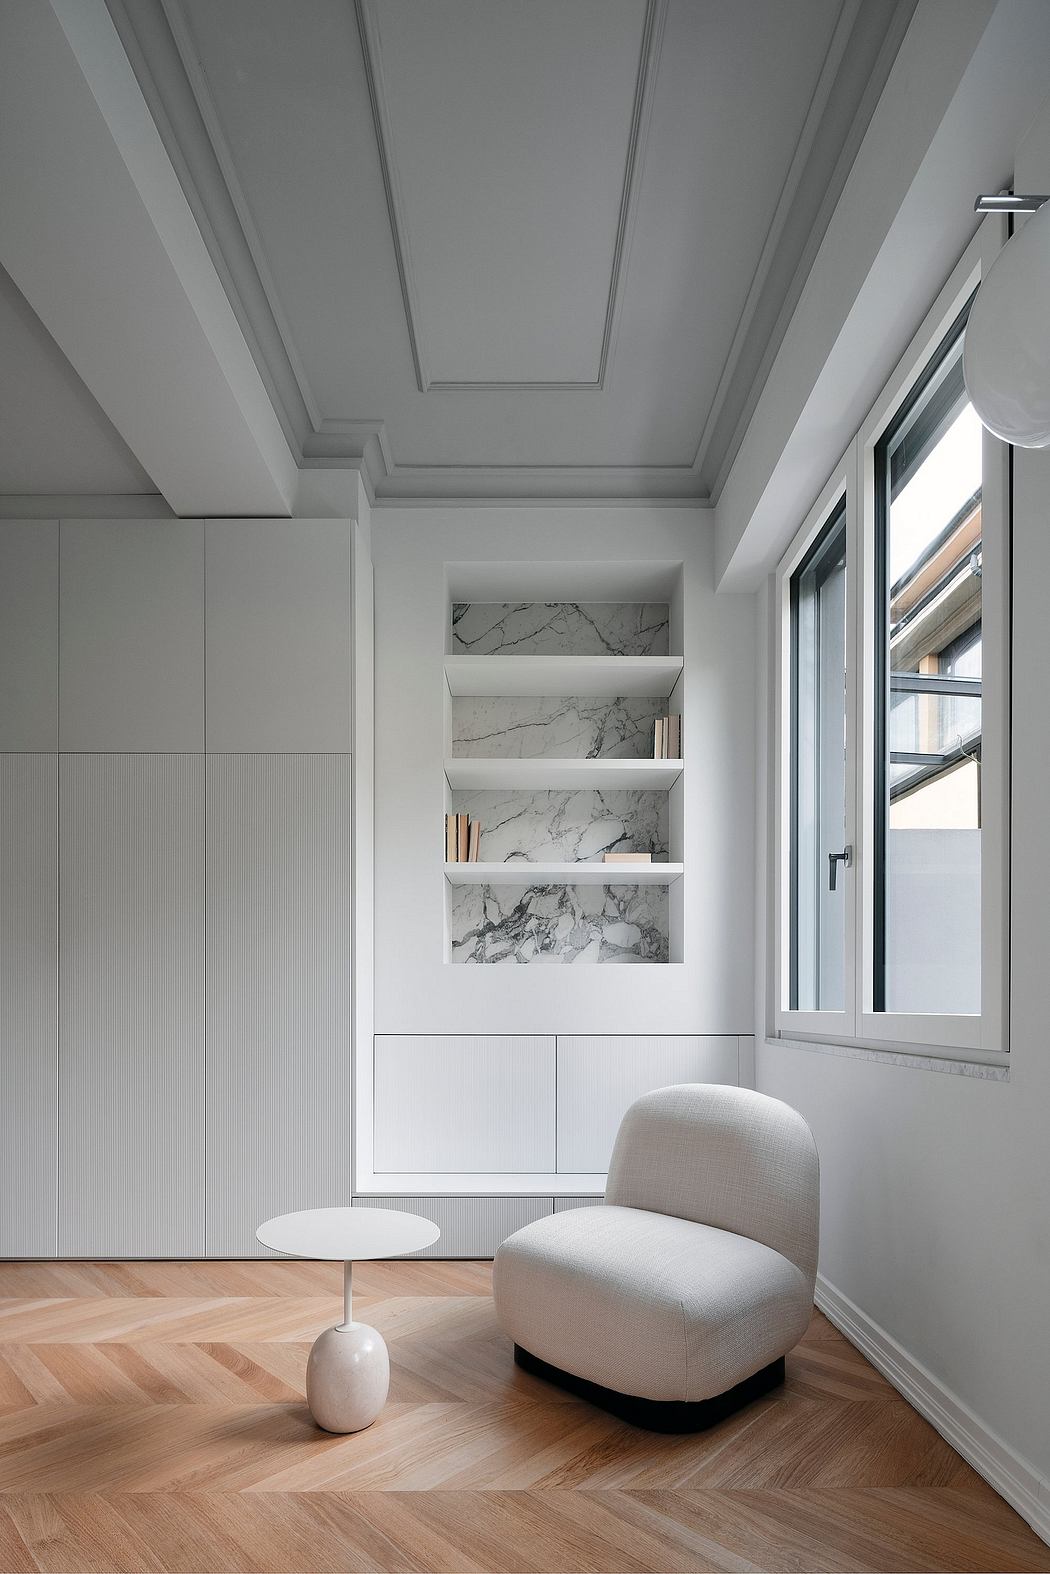 Elegant room with herringbone floor and white marble shelves.